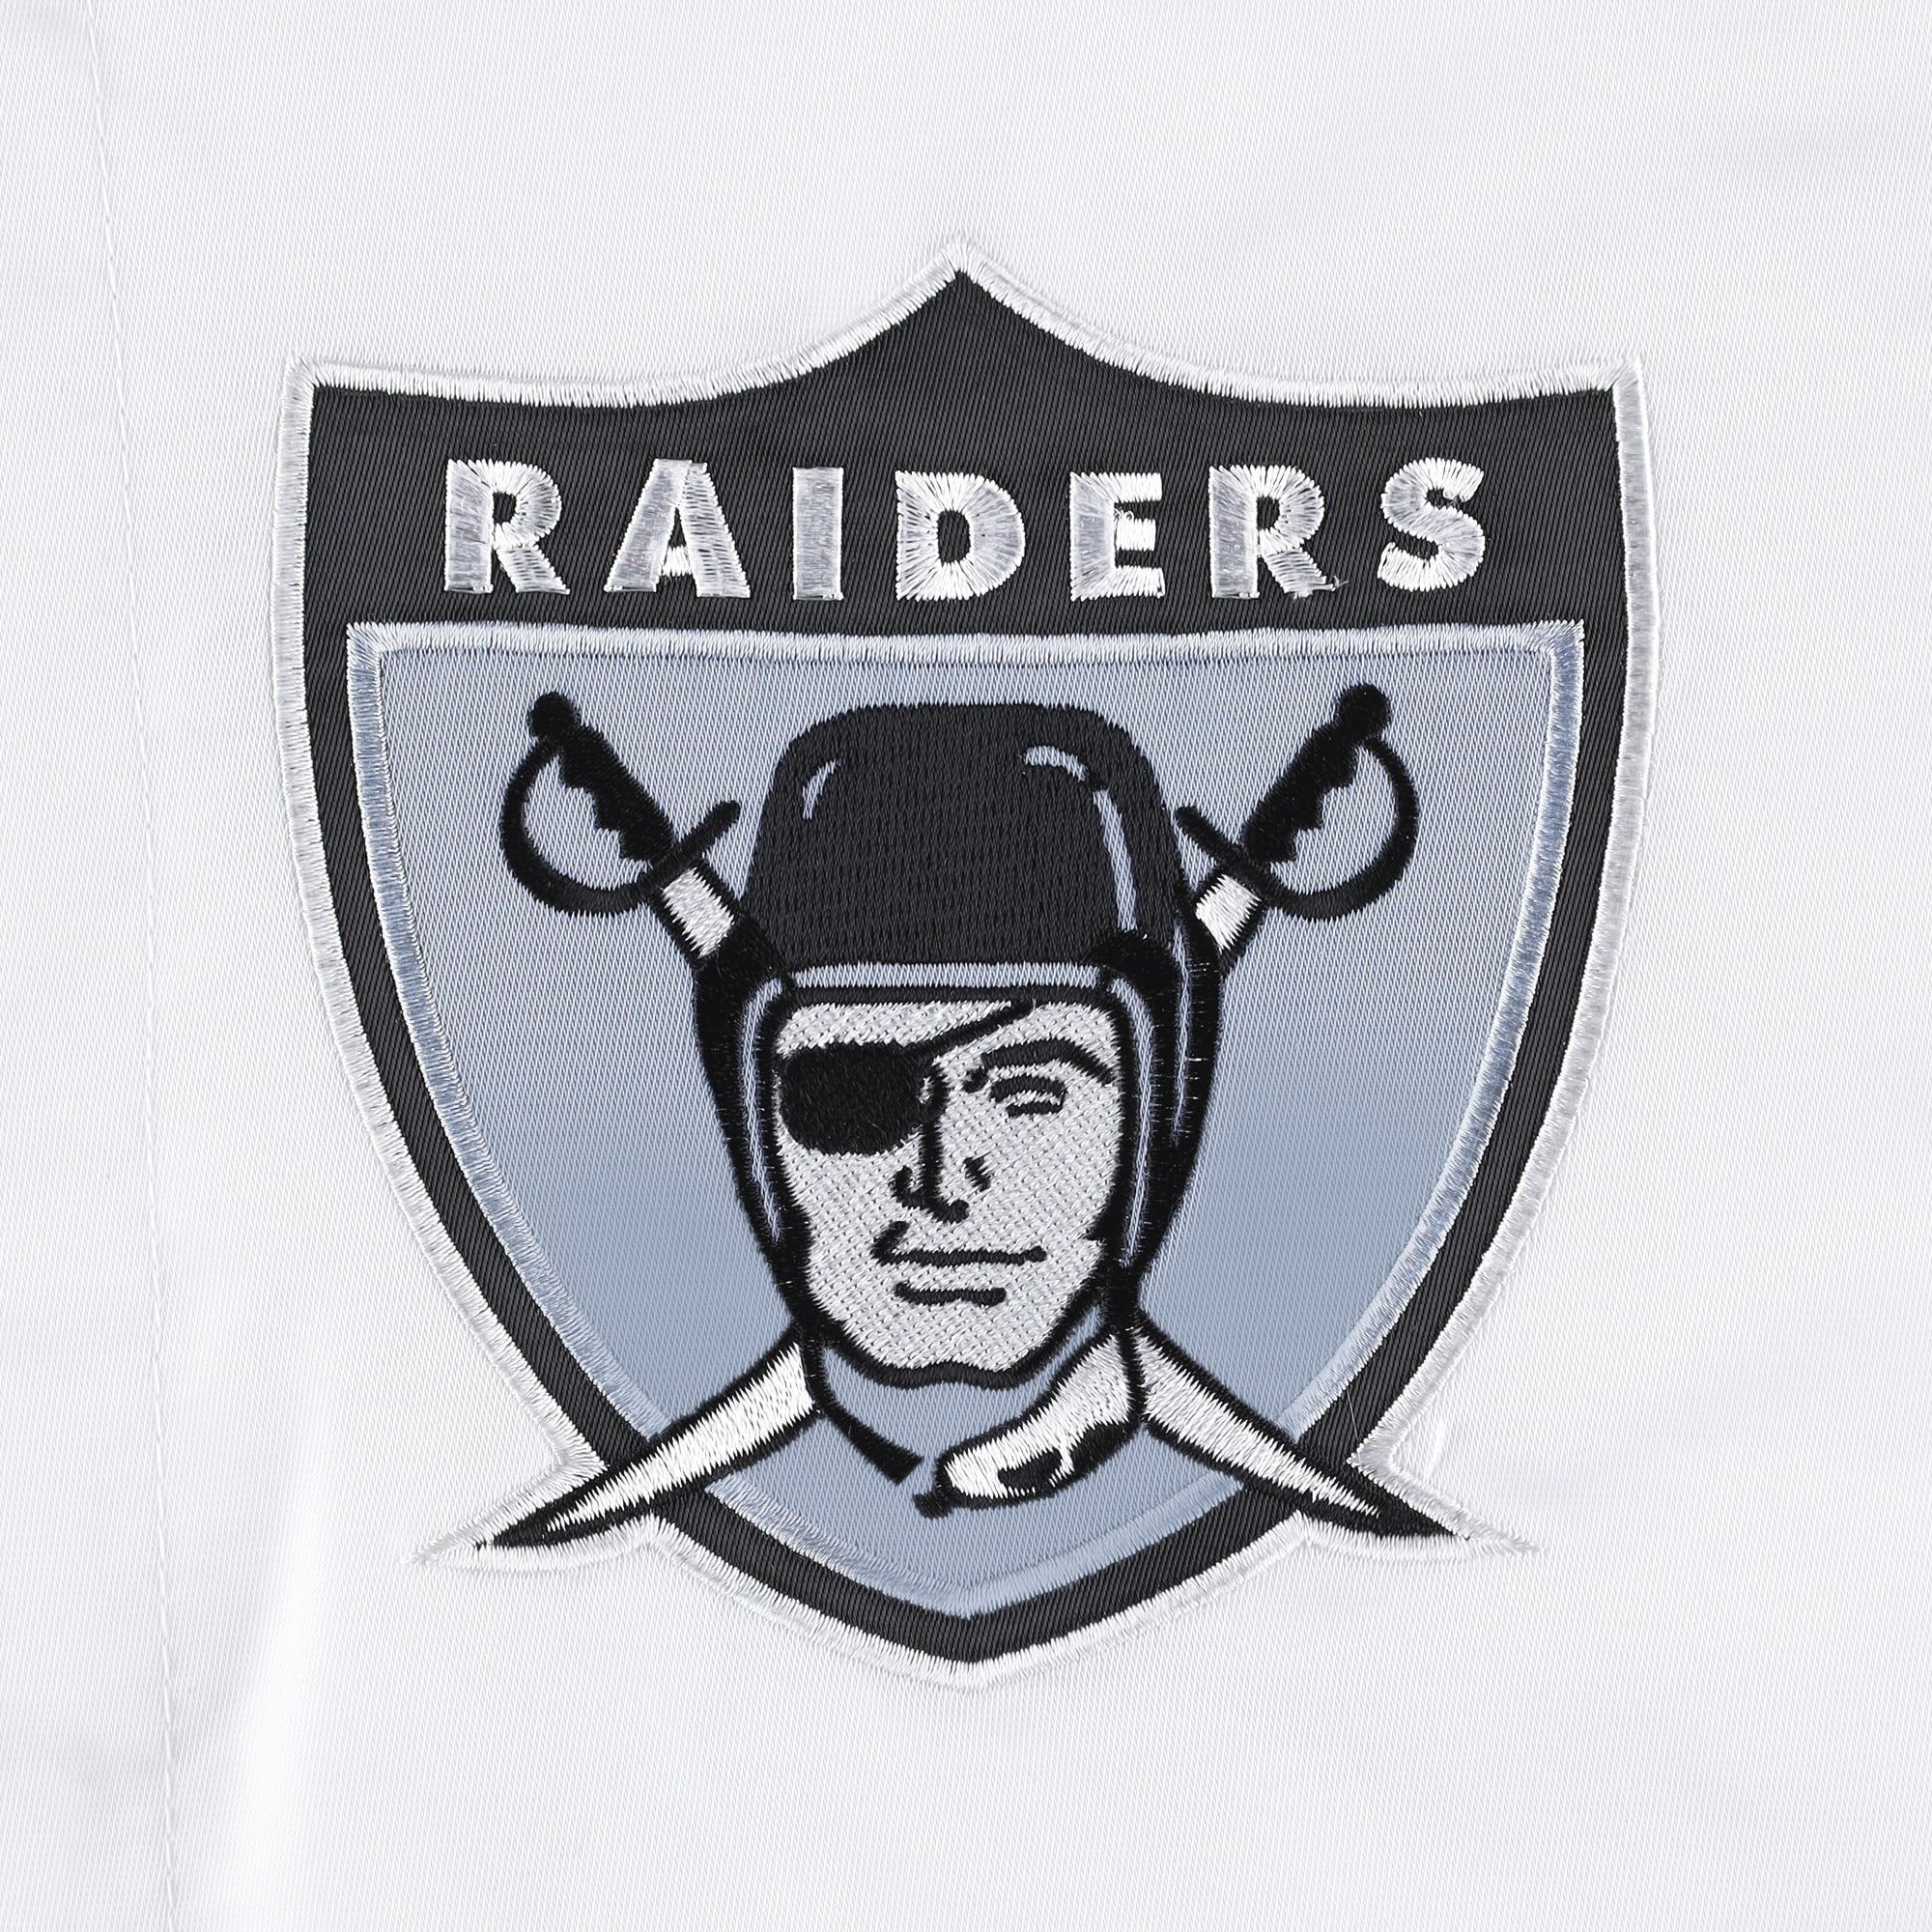 Men's Starter Black Las Vegas Raiders The Reliever Raglan Full-Snap Jacket